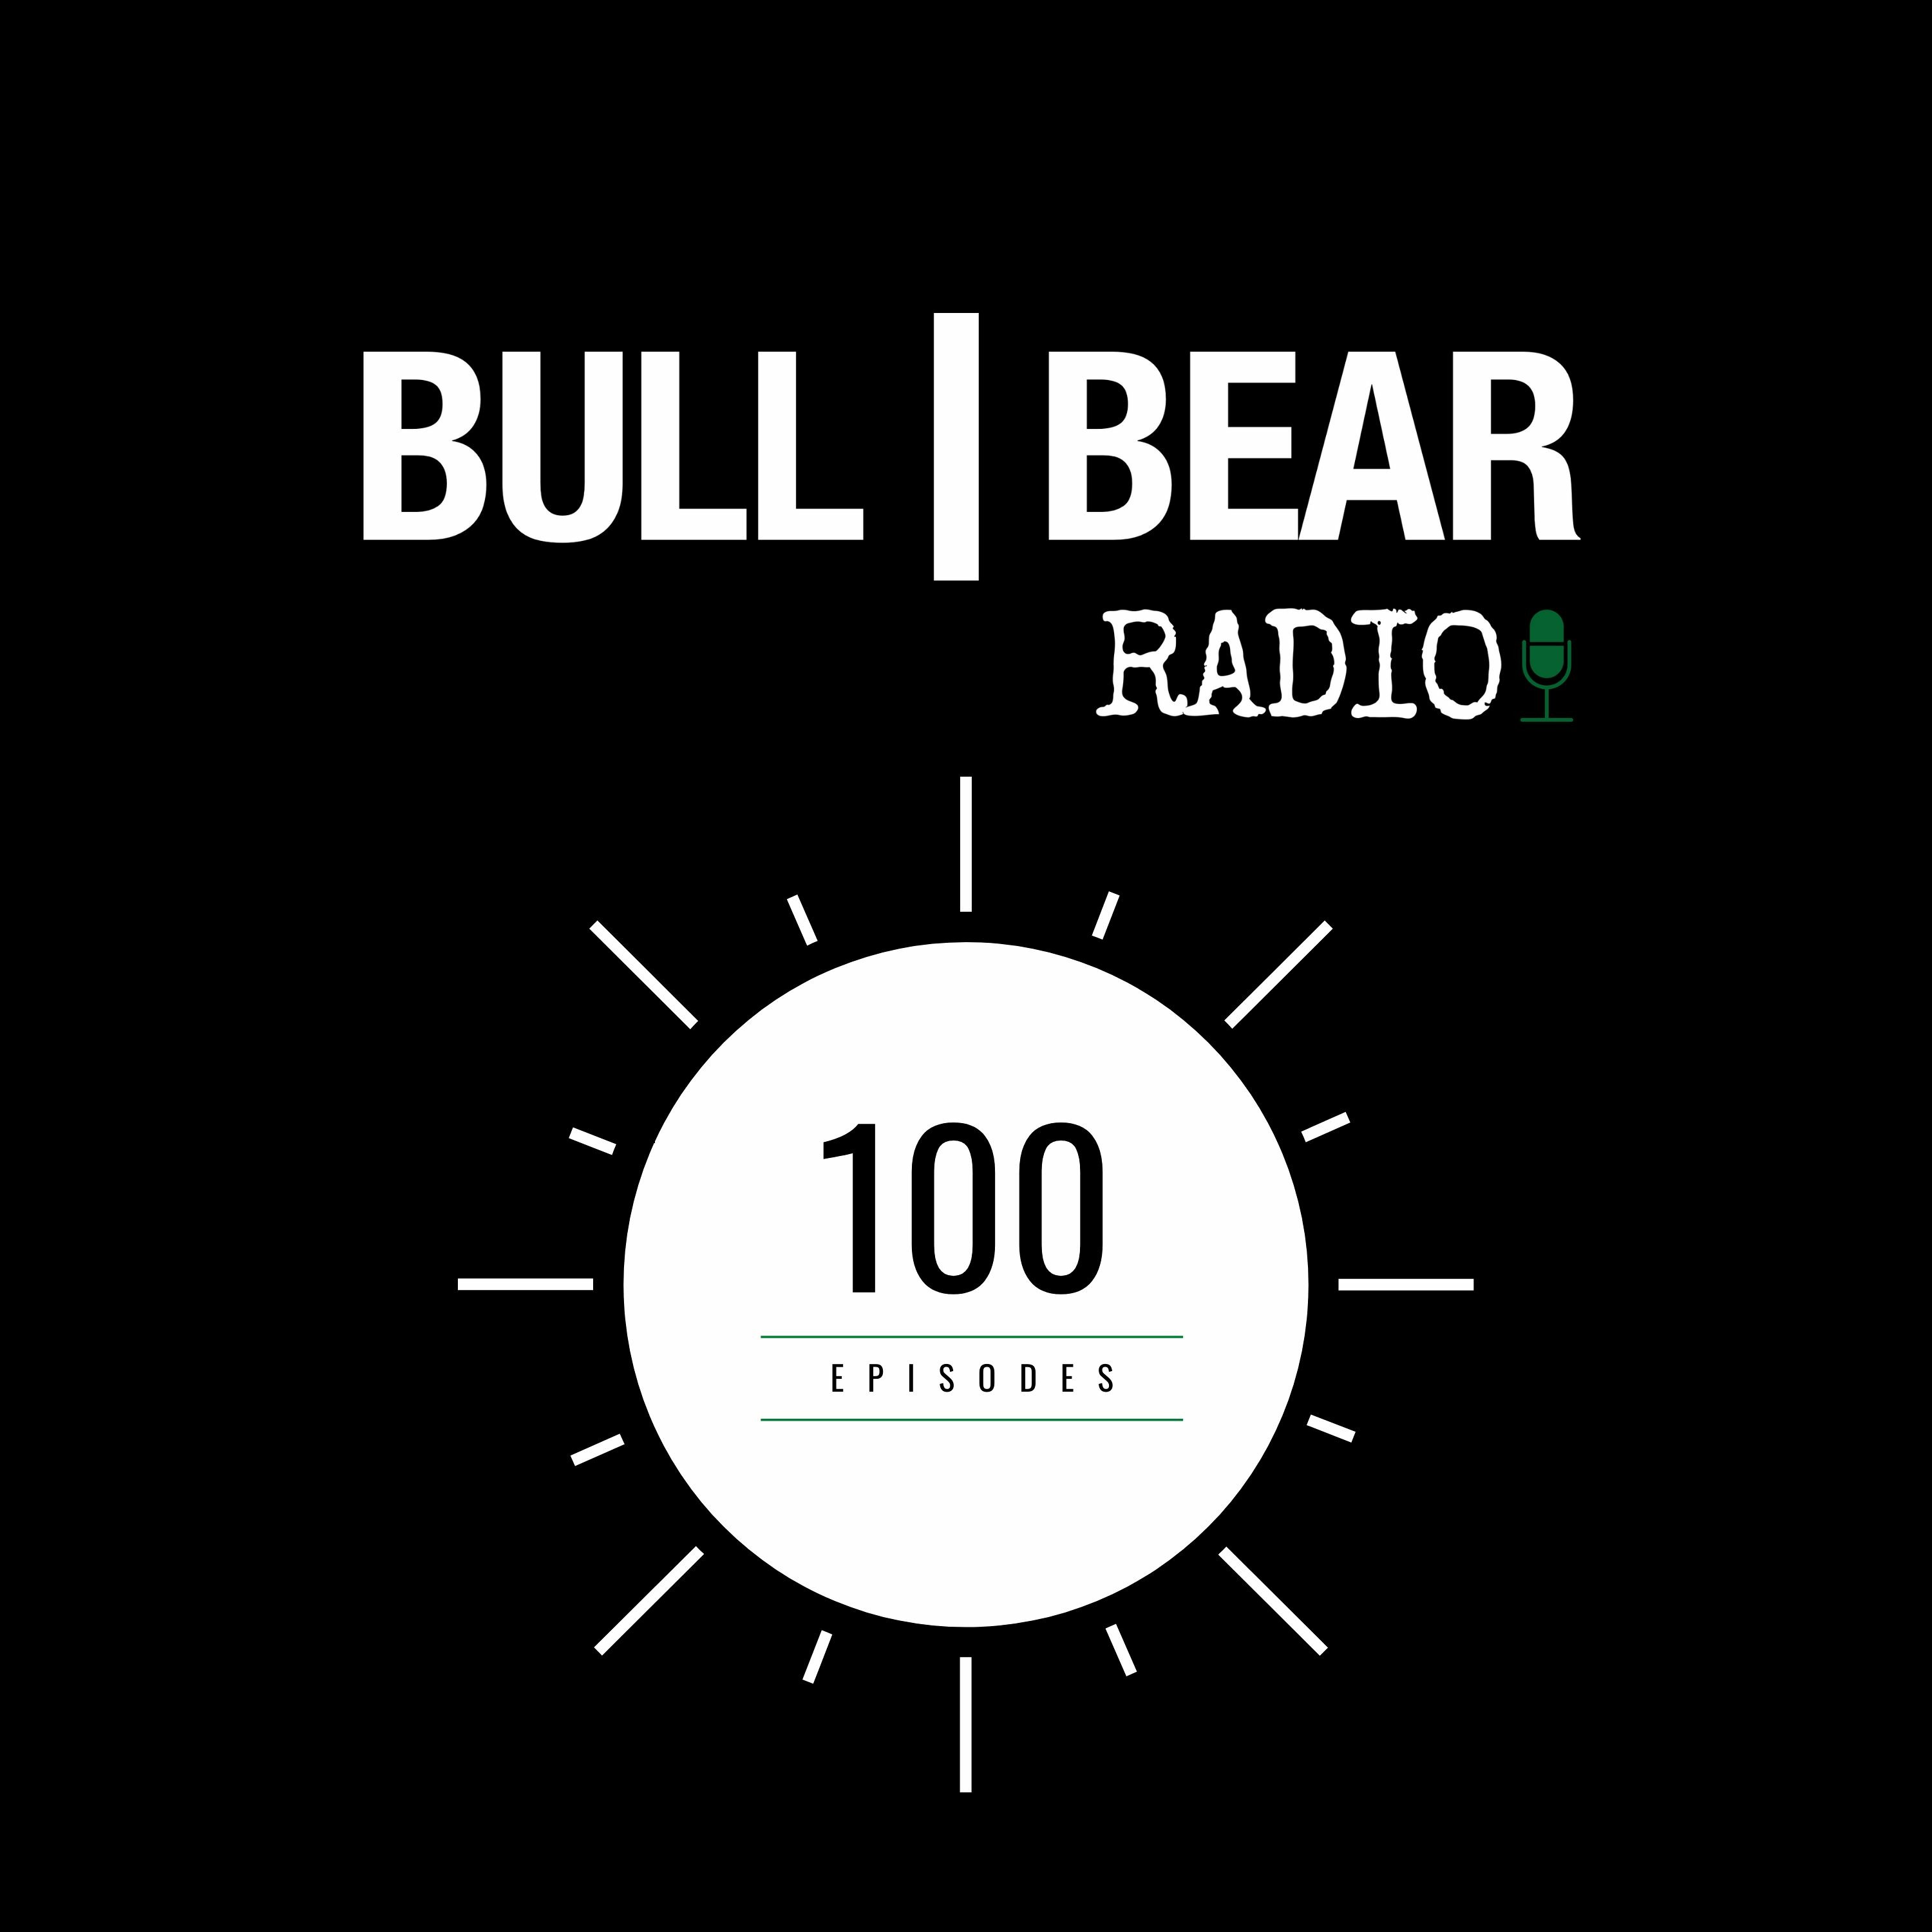 It's Bull|Bear Radio Episode 100